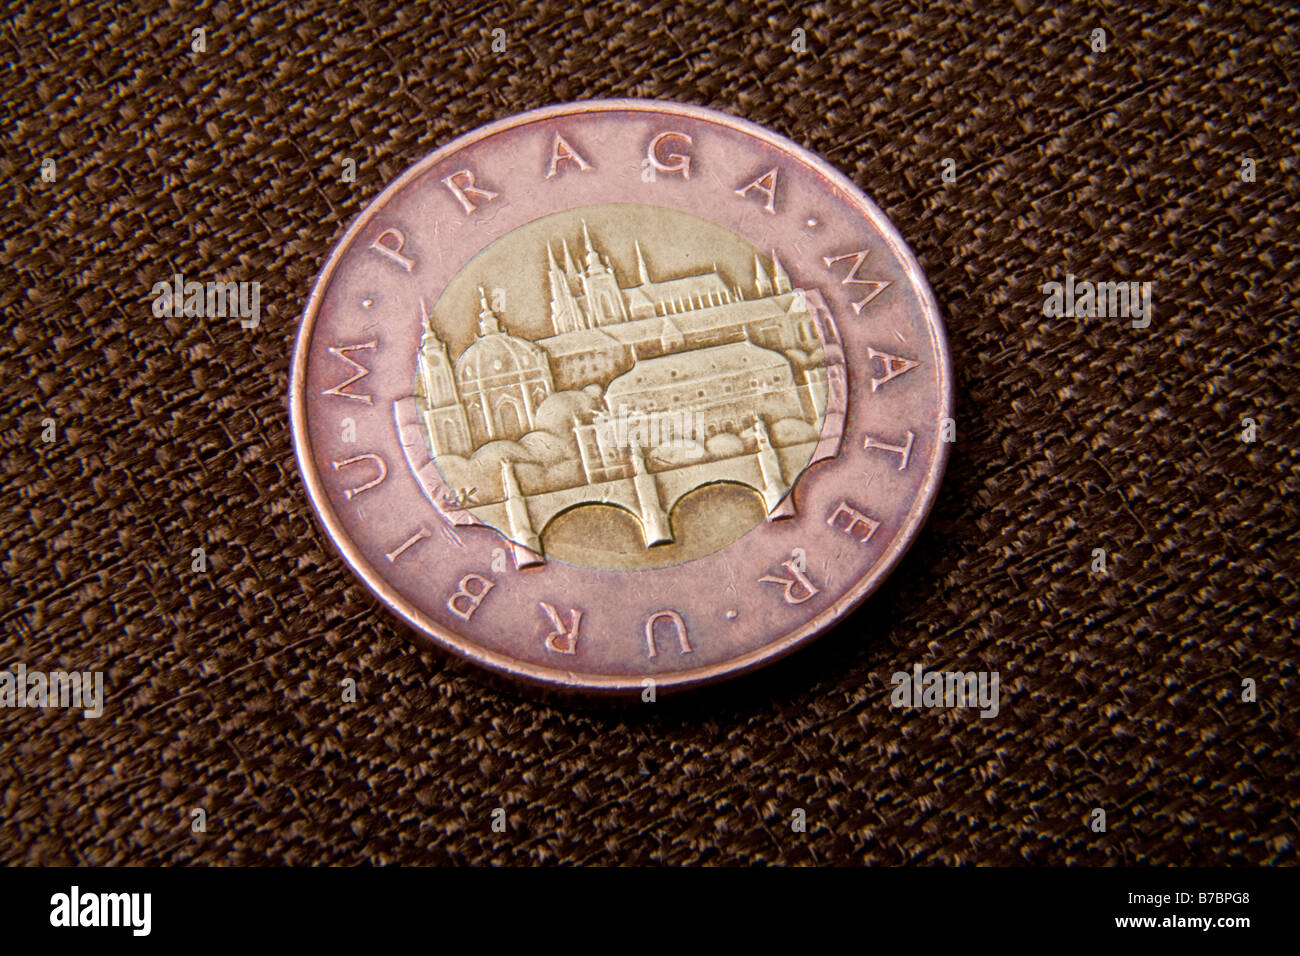 Reverse side of Czech 50 Koruna coin features Prague Castle and Charles Bridge  economy bank money cash Stock Photo